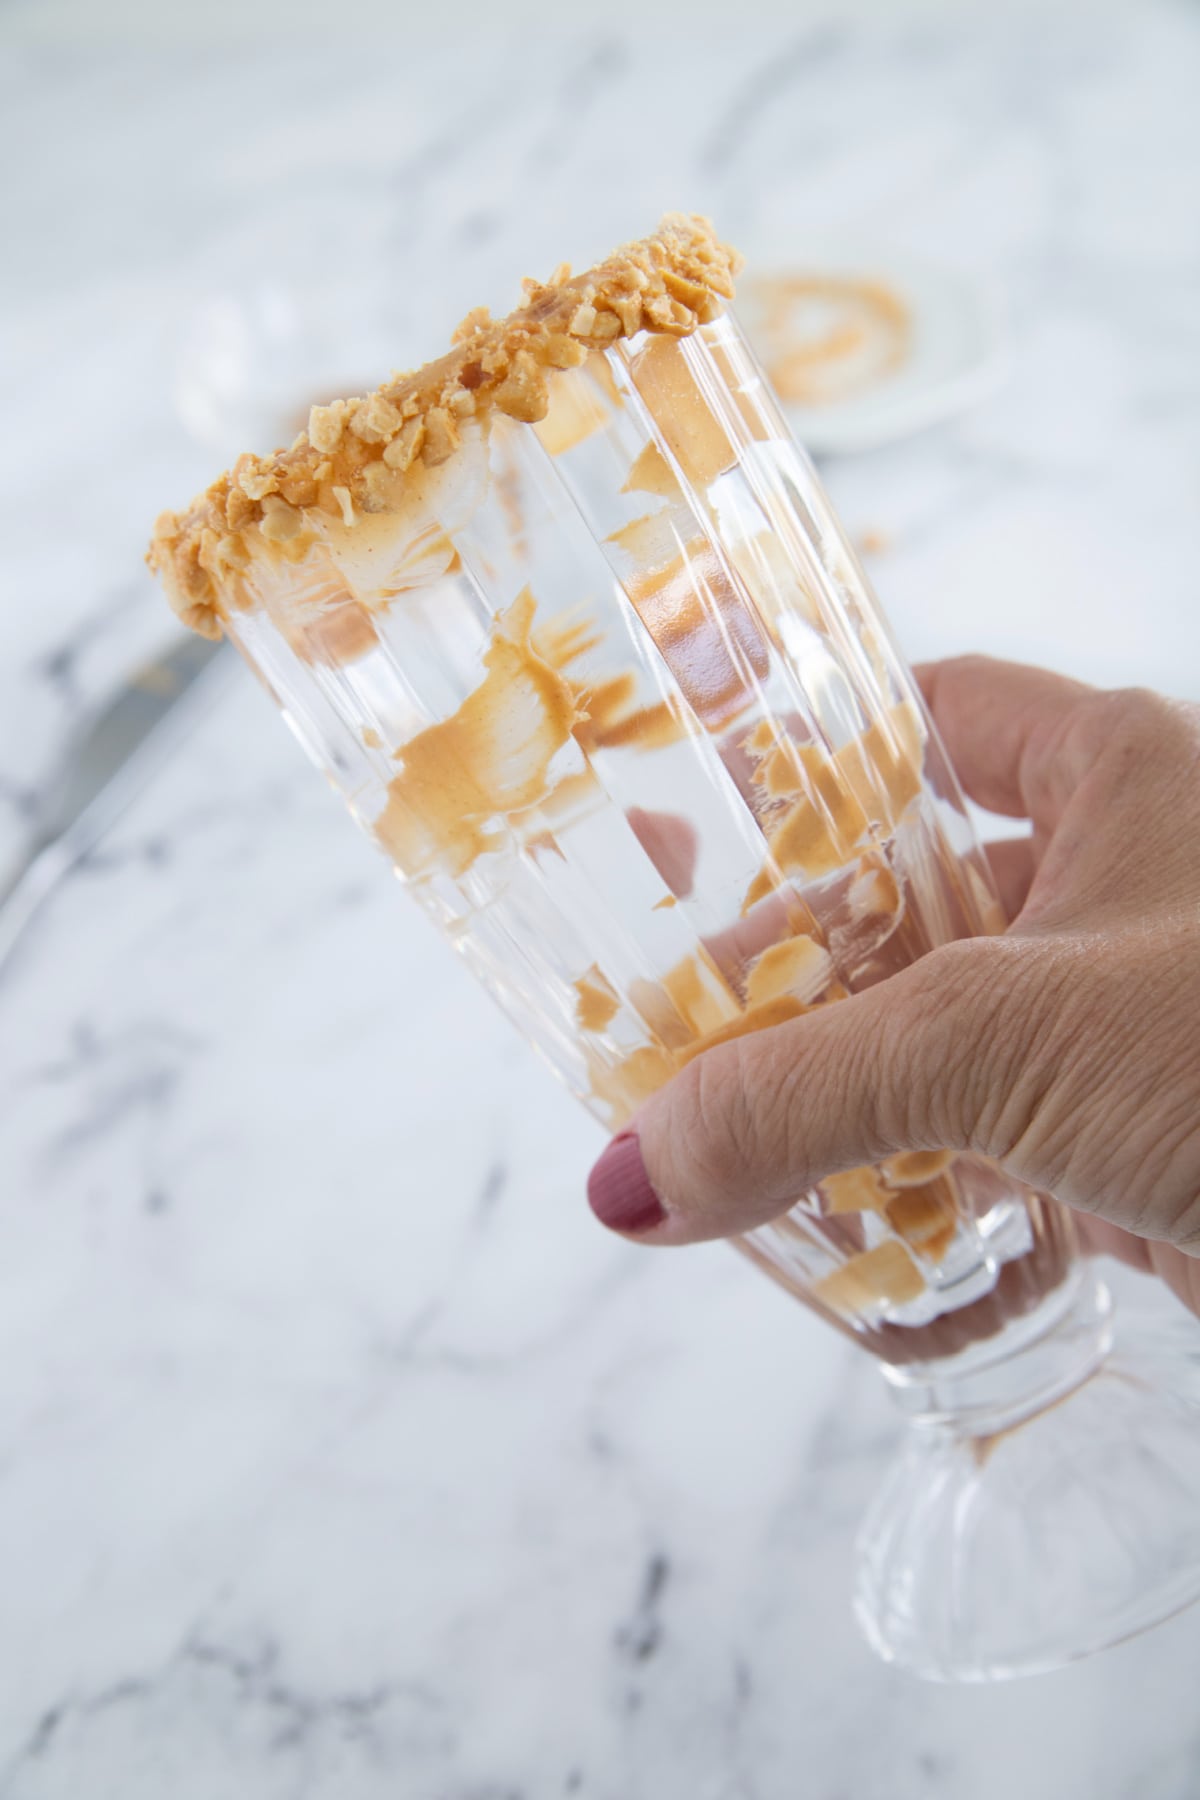 Milkshake glass rimmed with crushed peanut butter